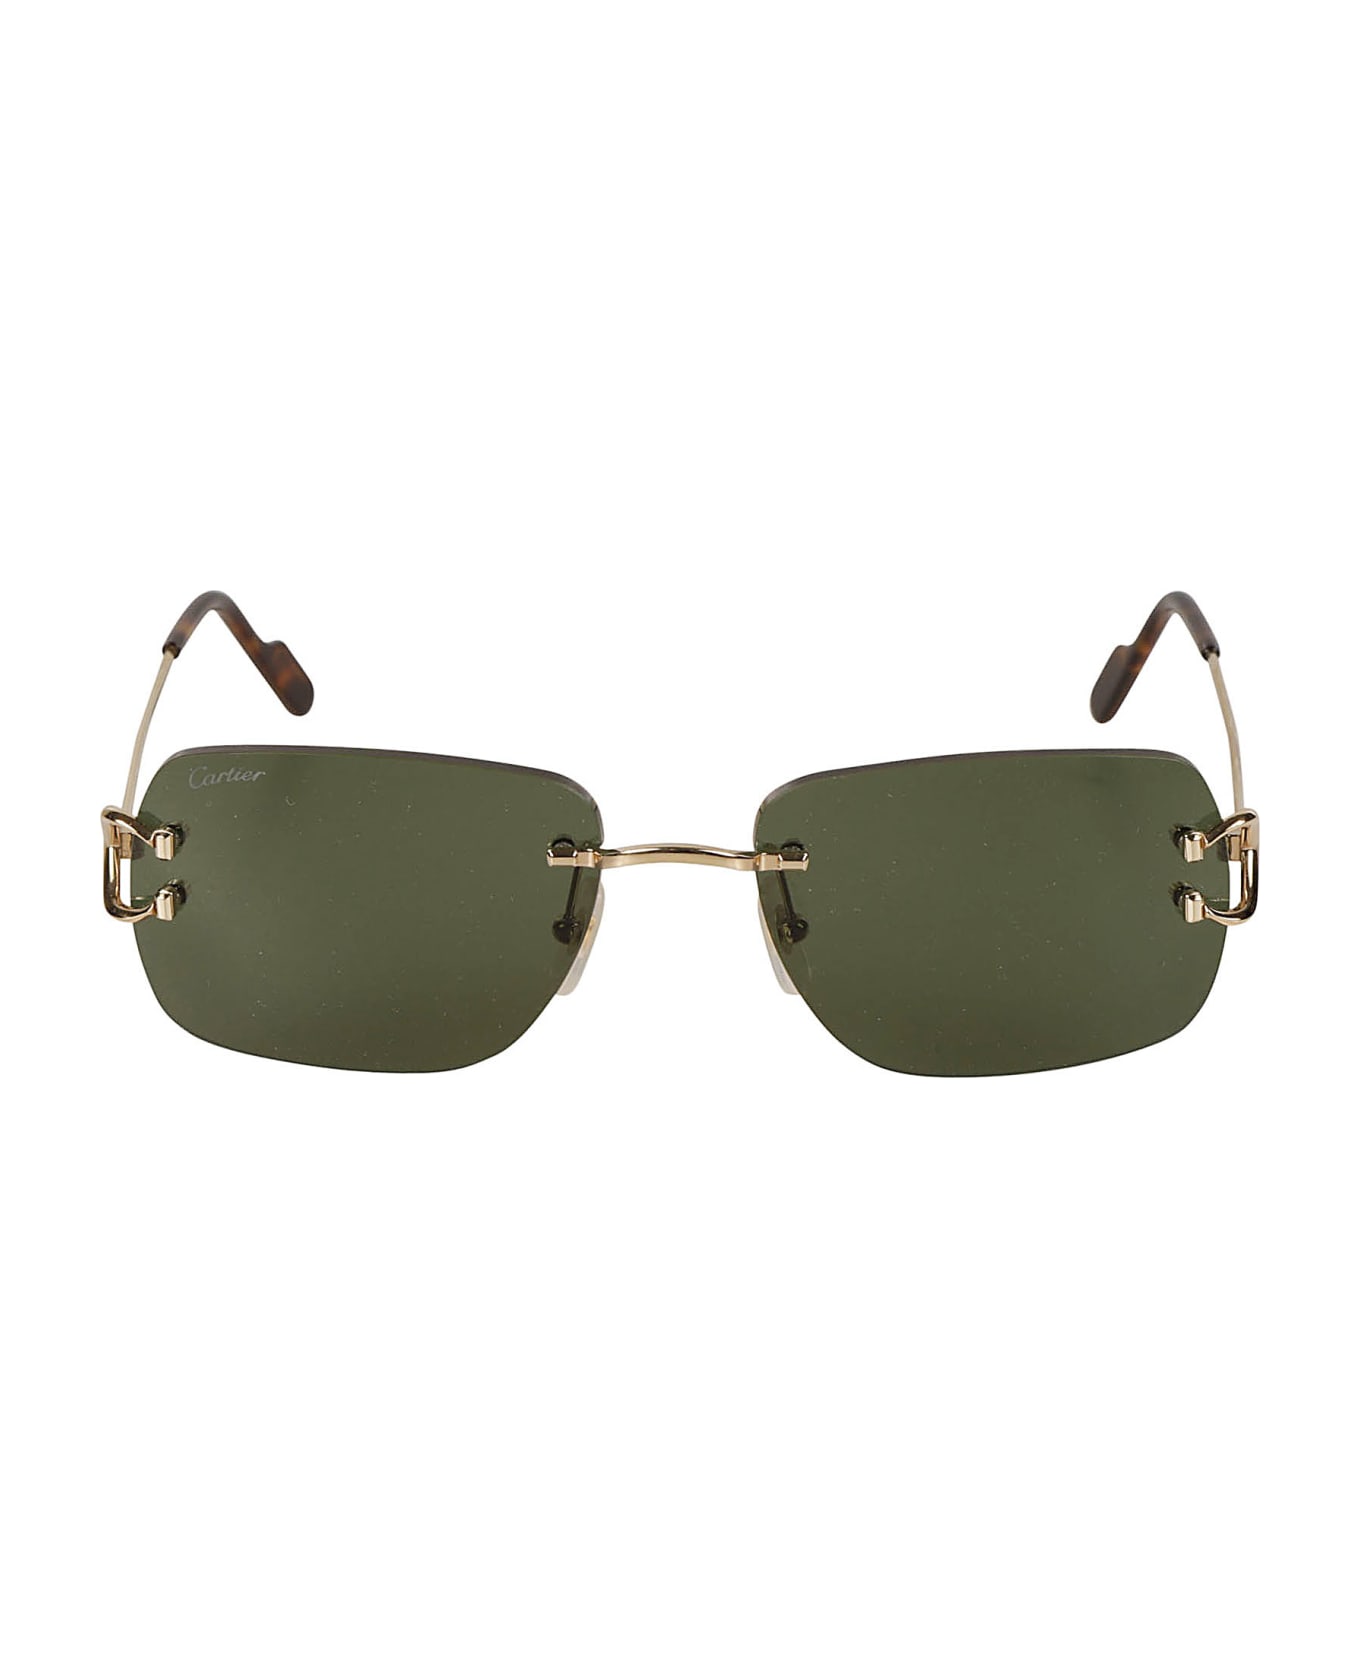 Cartier Eyewear Frame-less Square Sunglasses Sunglasses - Gold/Green